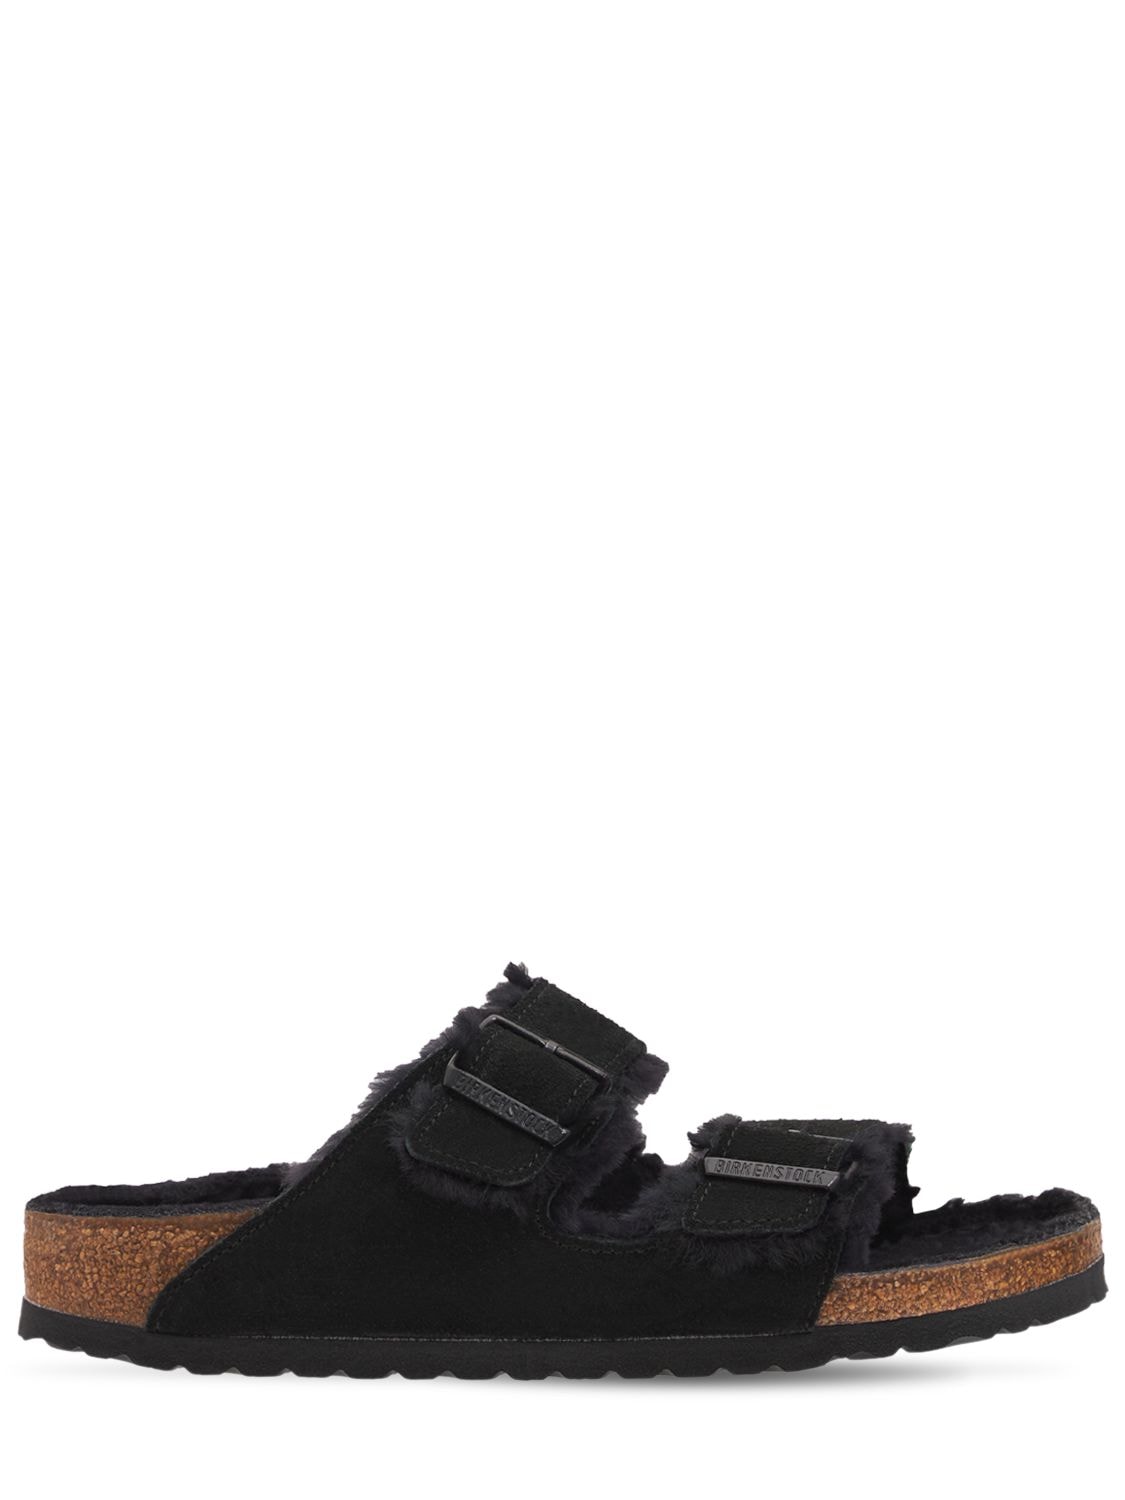 Shop Birkenstock Arizona Shearling & Suede Sandals In Black